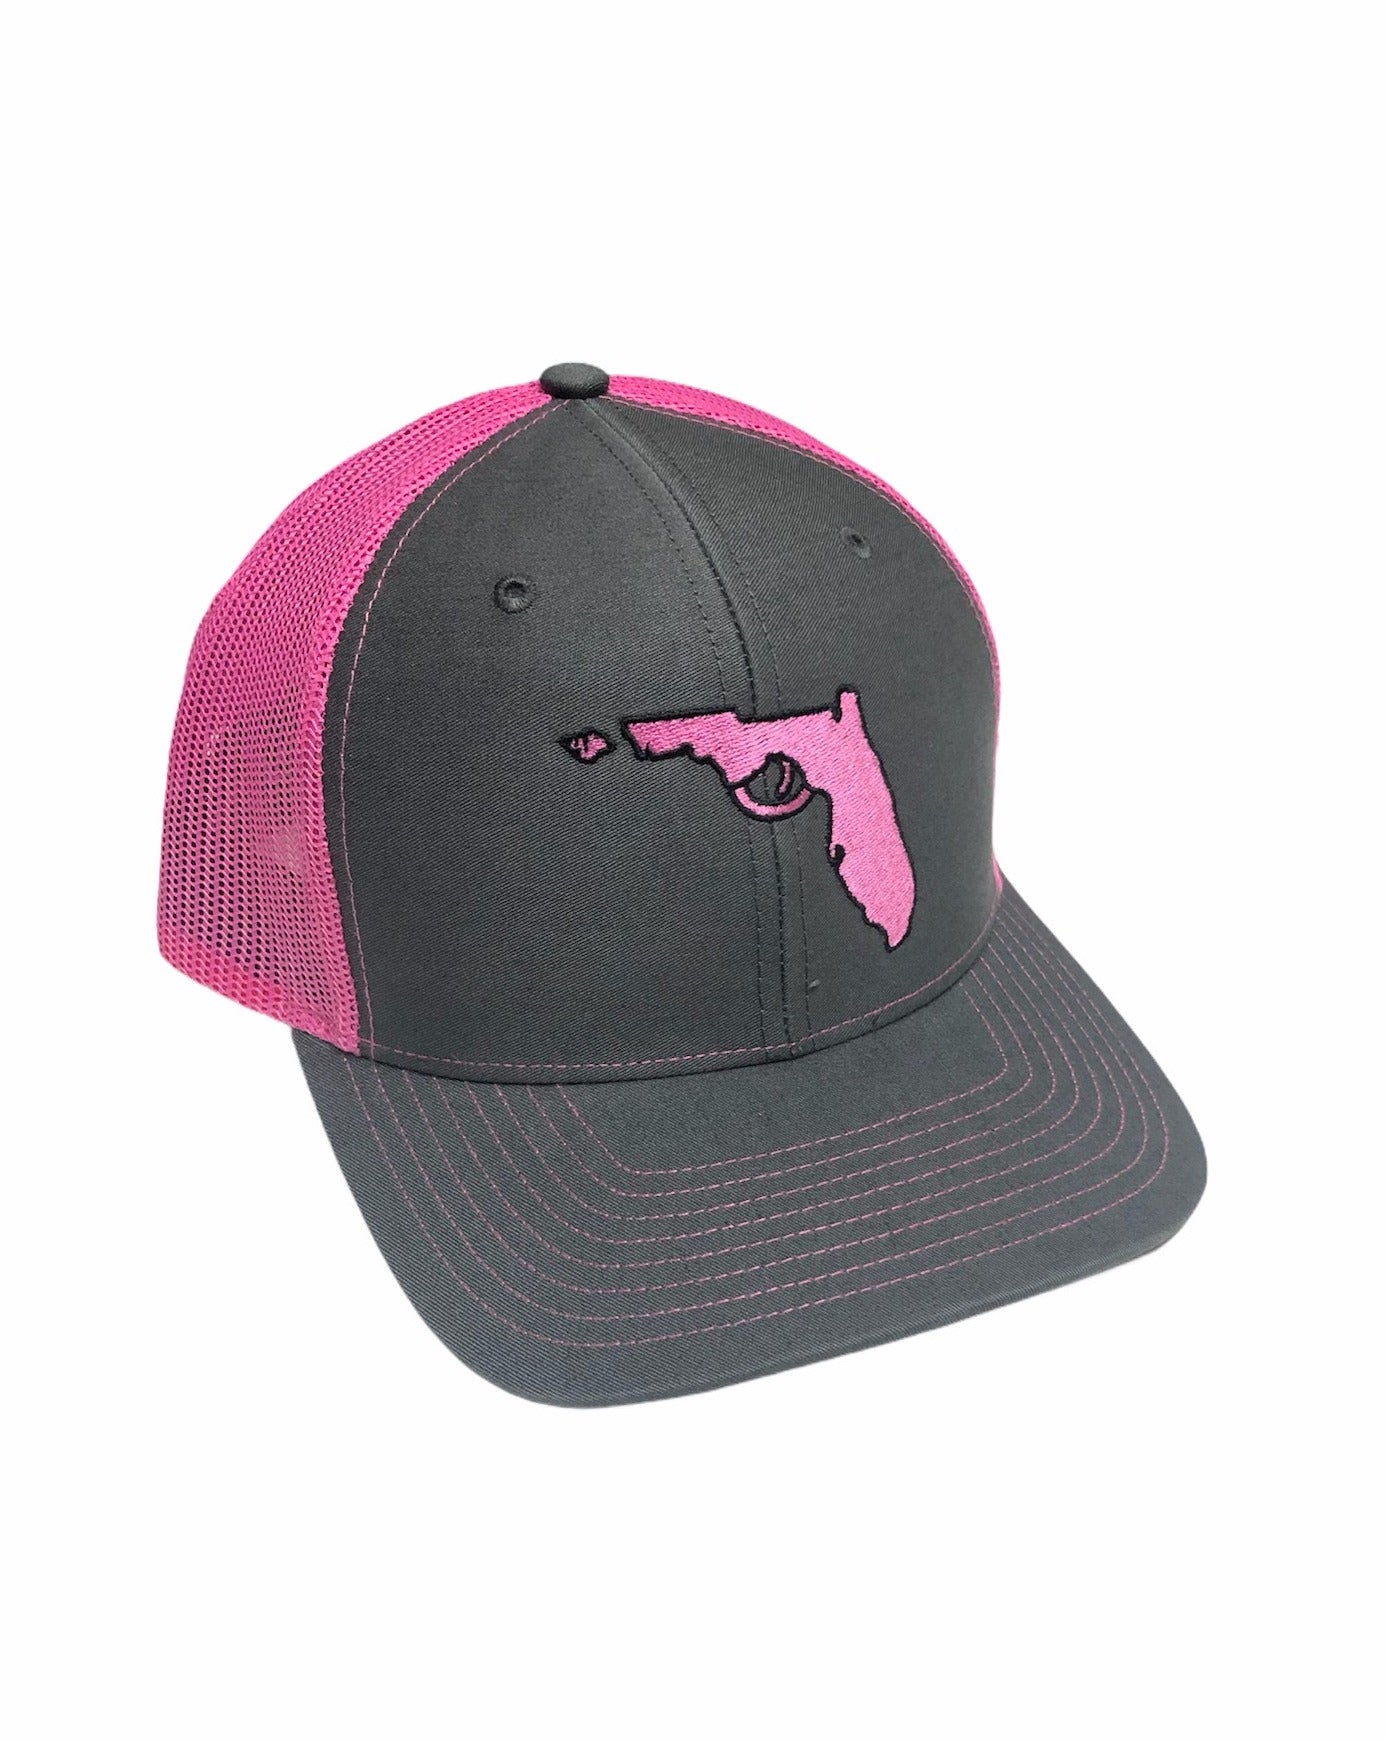 Pink & Charcoal Florida Gun Hat